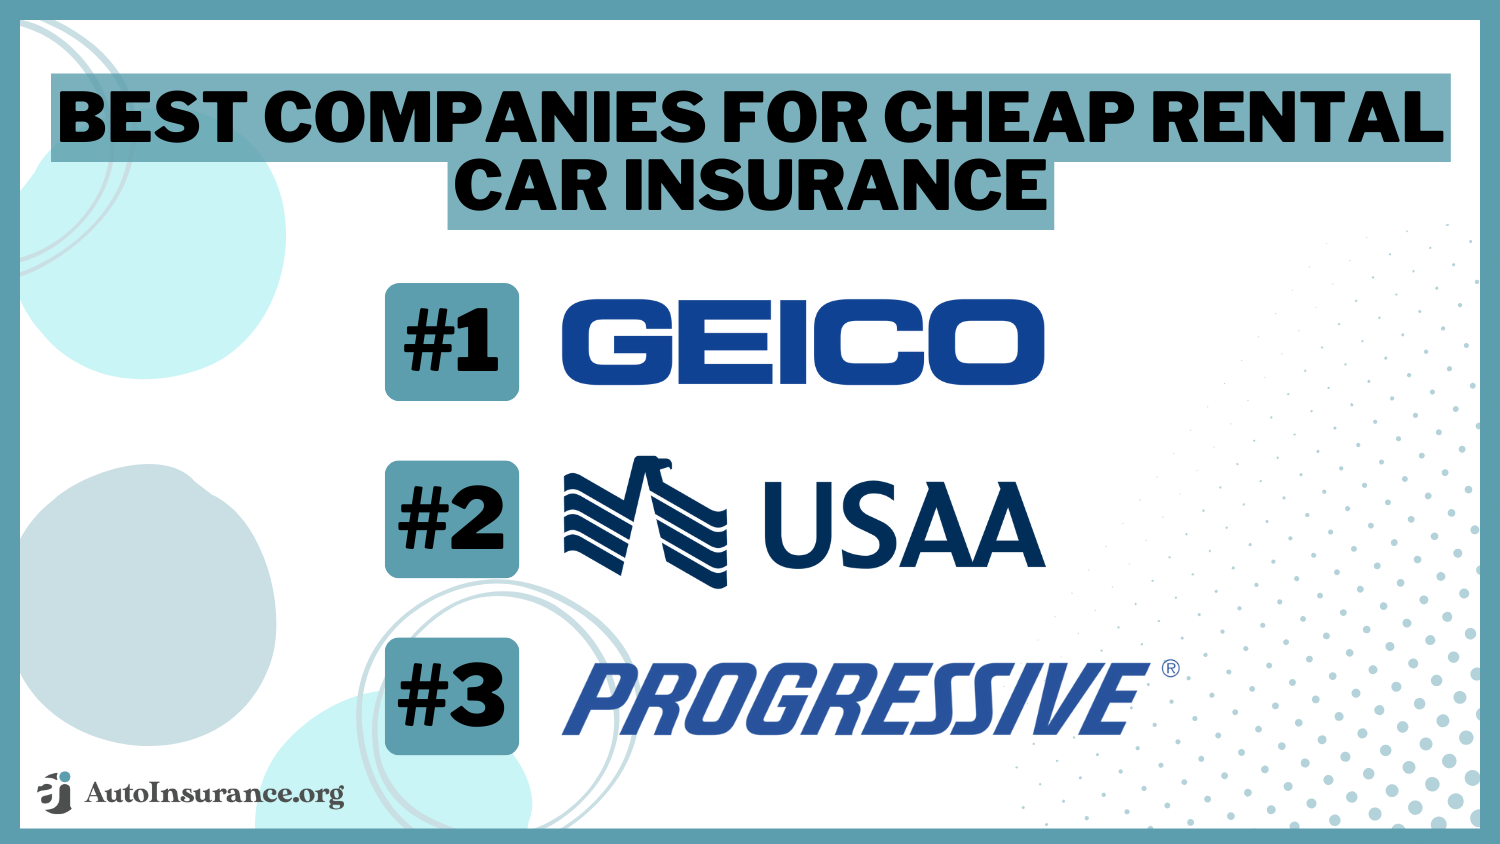 Best Companies for Cheap Rental Car Insurance: Geico. USAA, Progressive